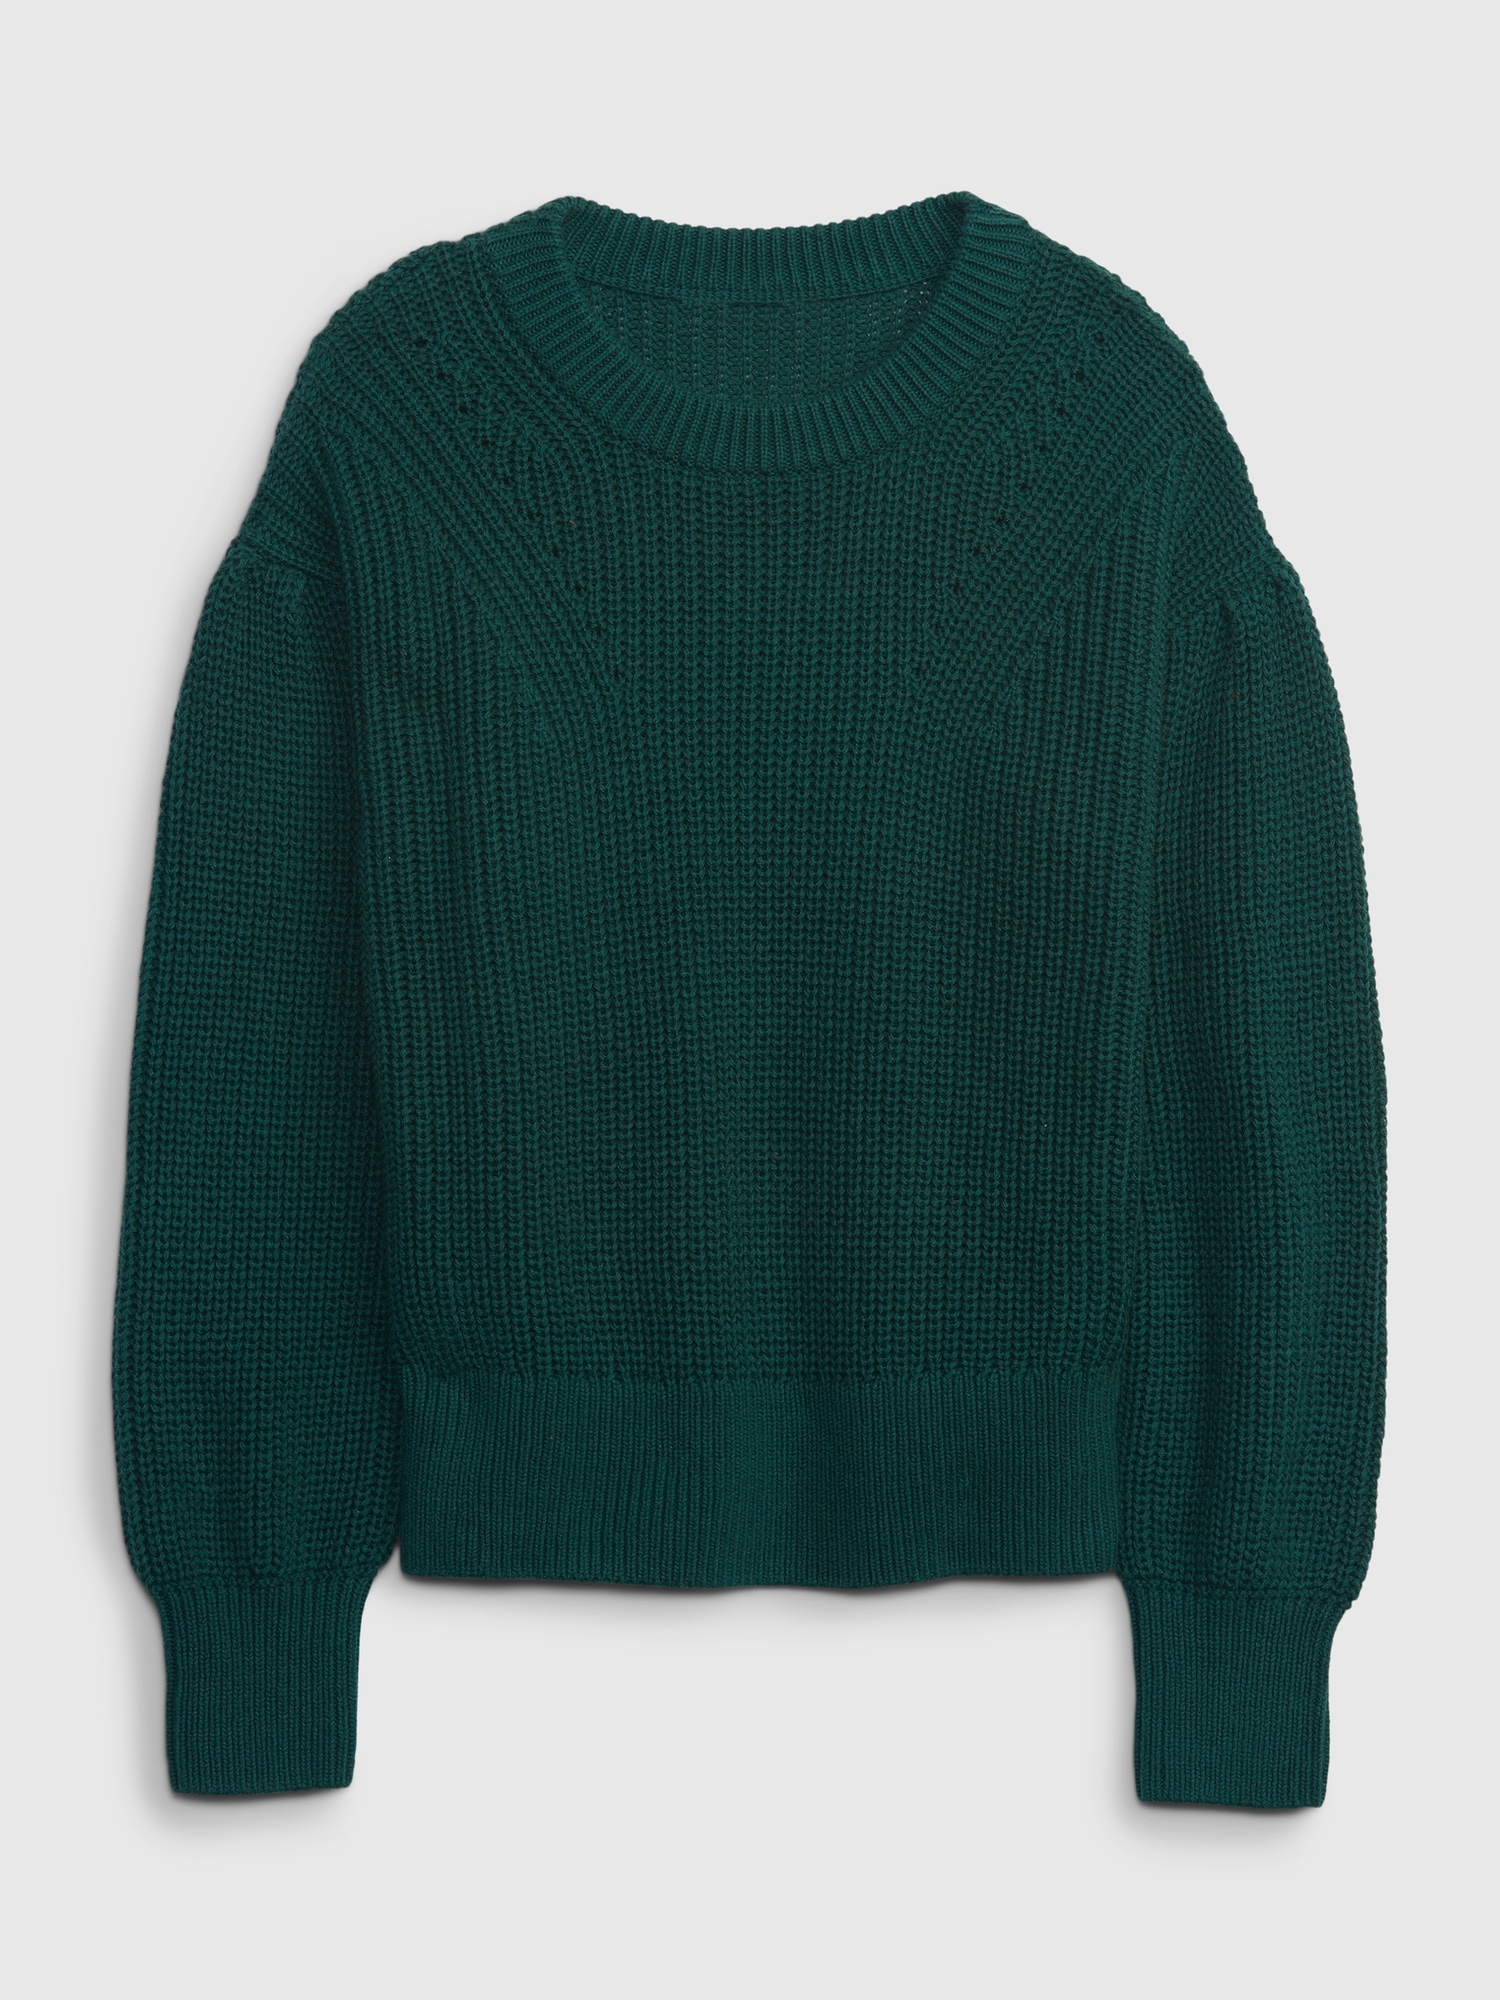 Gap Kids Shaker-Stitch Puff-Sleeve Sweater green. 1